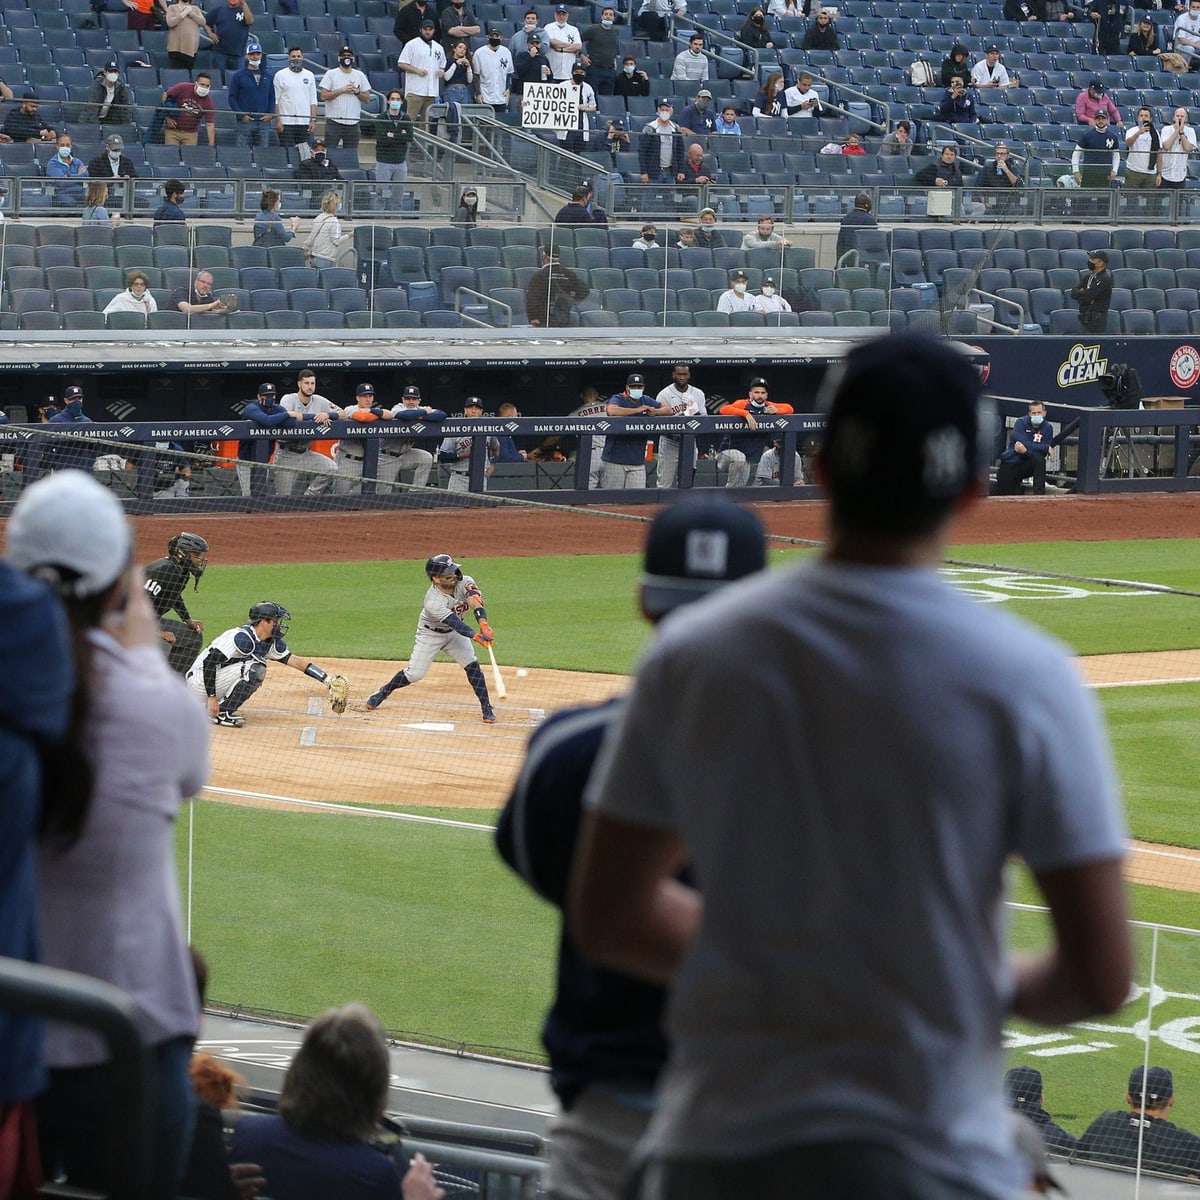 Yankee fans mercilessly jeer Astros in Bronx; 'Trashtros